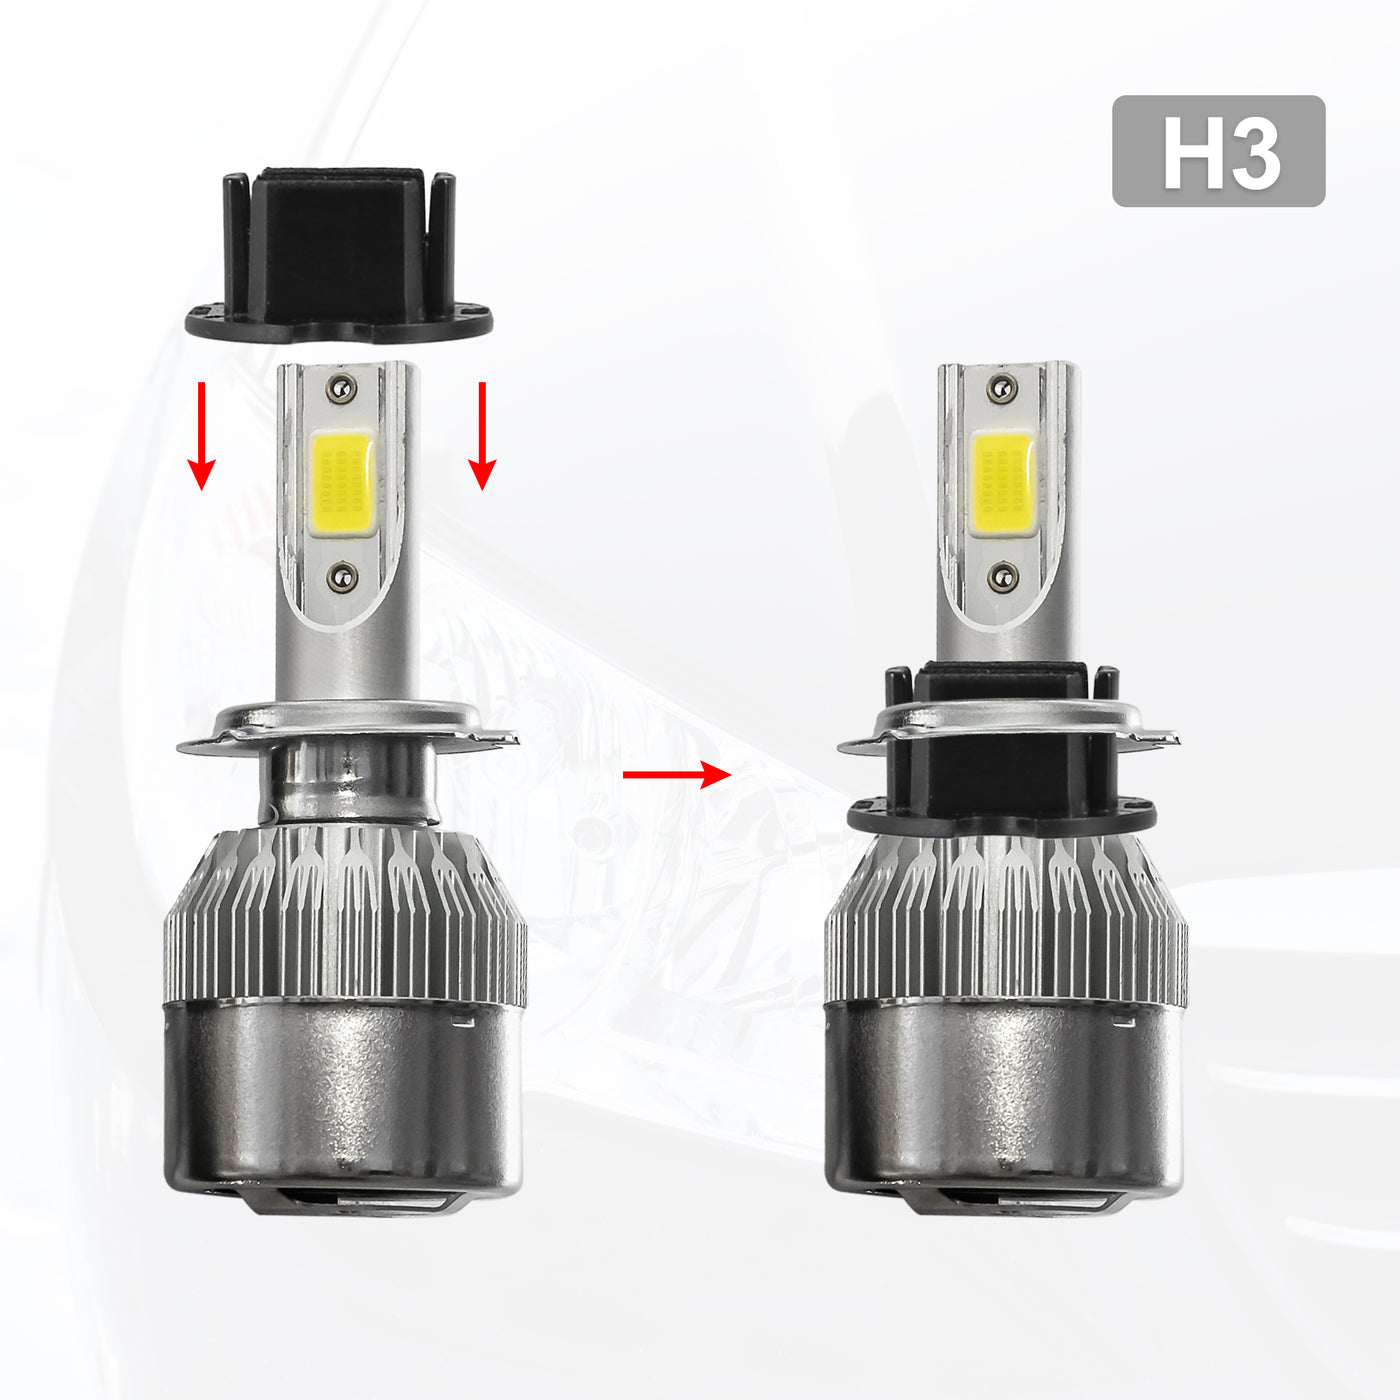 X AUTOHAUX 2pcs H3 LED Headlight Adapter Base Bulb Sockets Retainer Holder Universal for Car Black